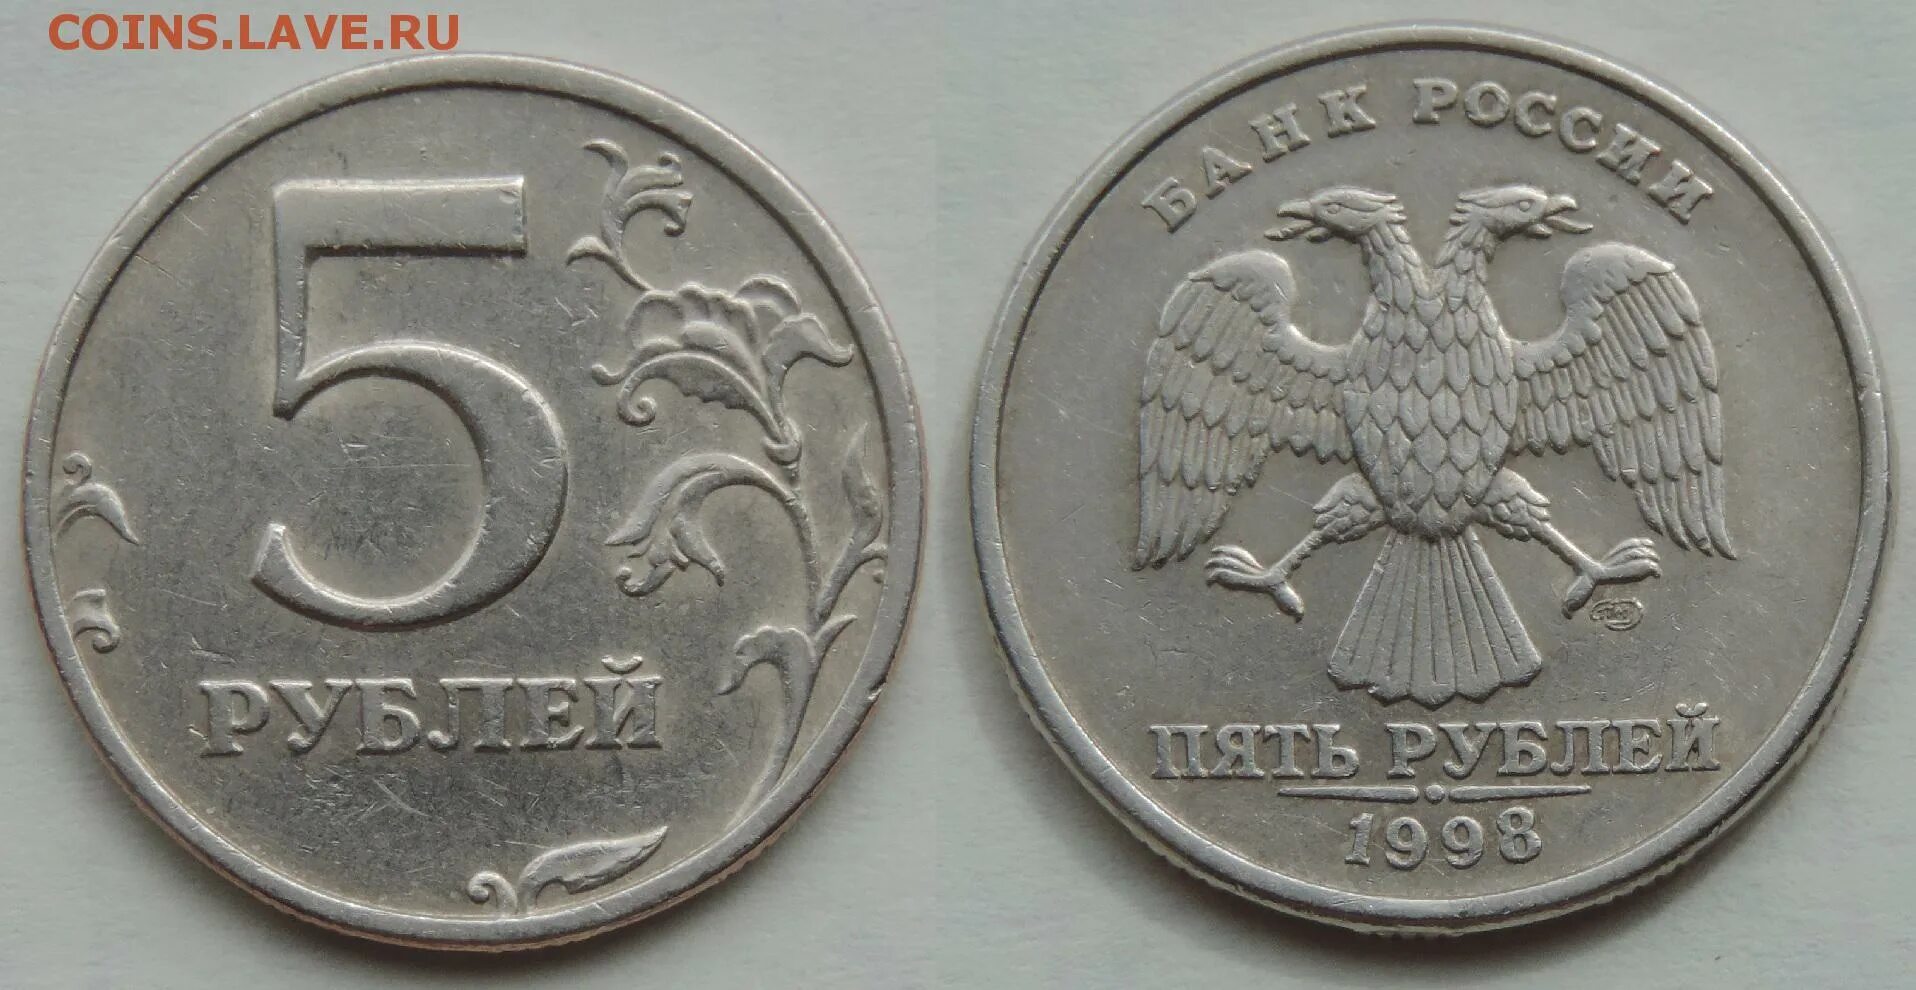 5 Рублей 1998 шт 2.4. Монета 5 рублей 1998 СПМД. Редкая монета 5 рублей 1998. 5 Рублей 1998 СПМД редкая.